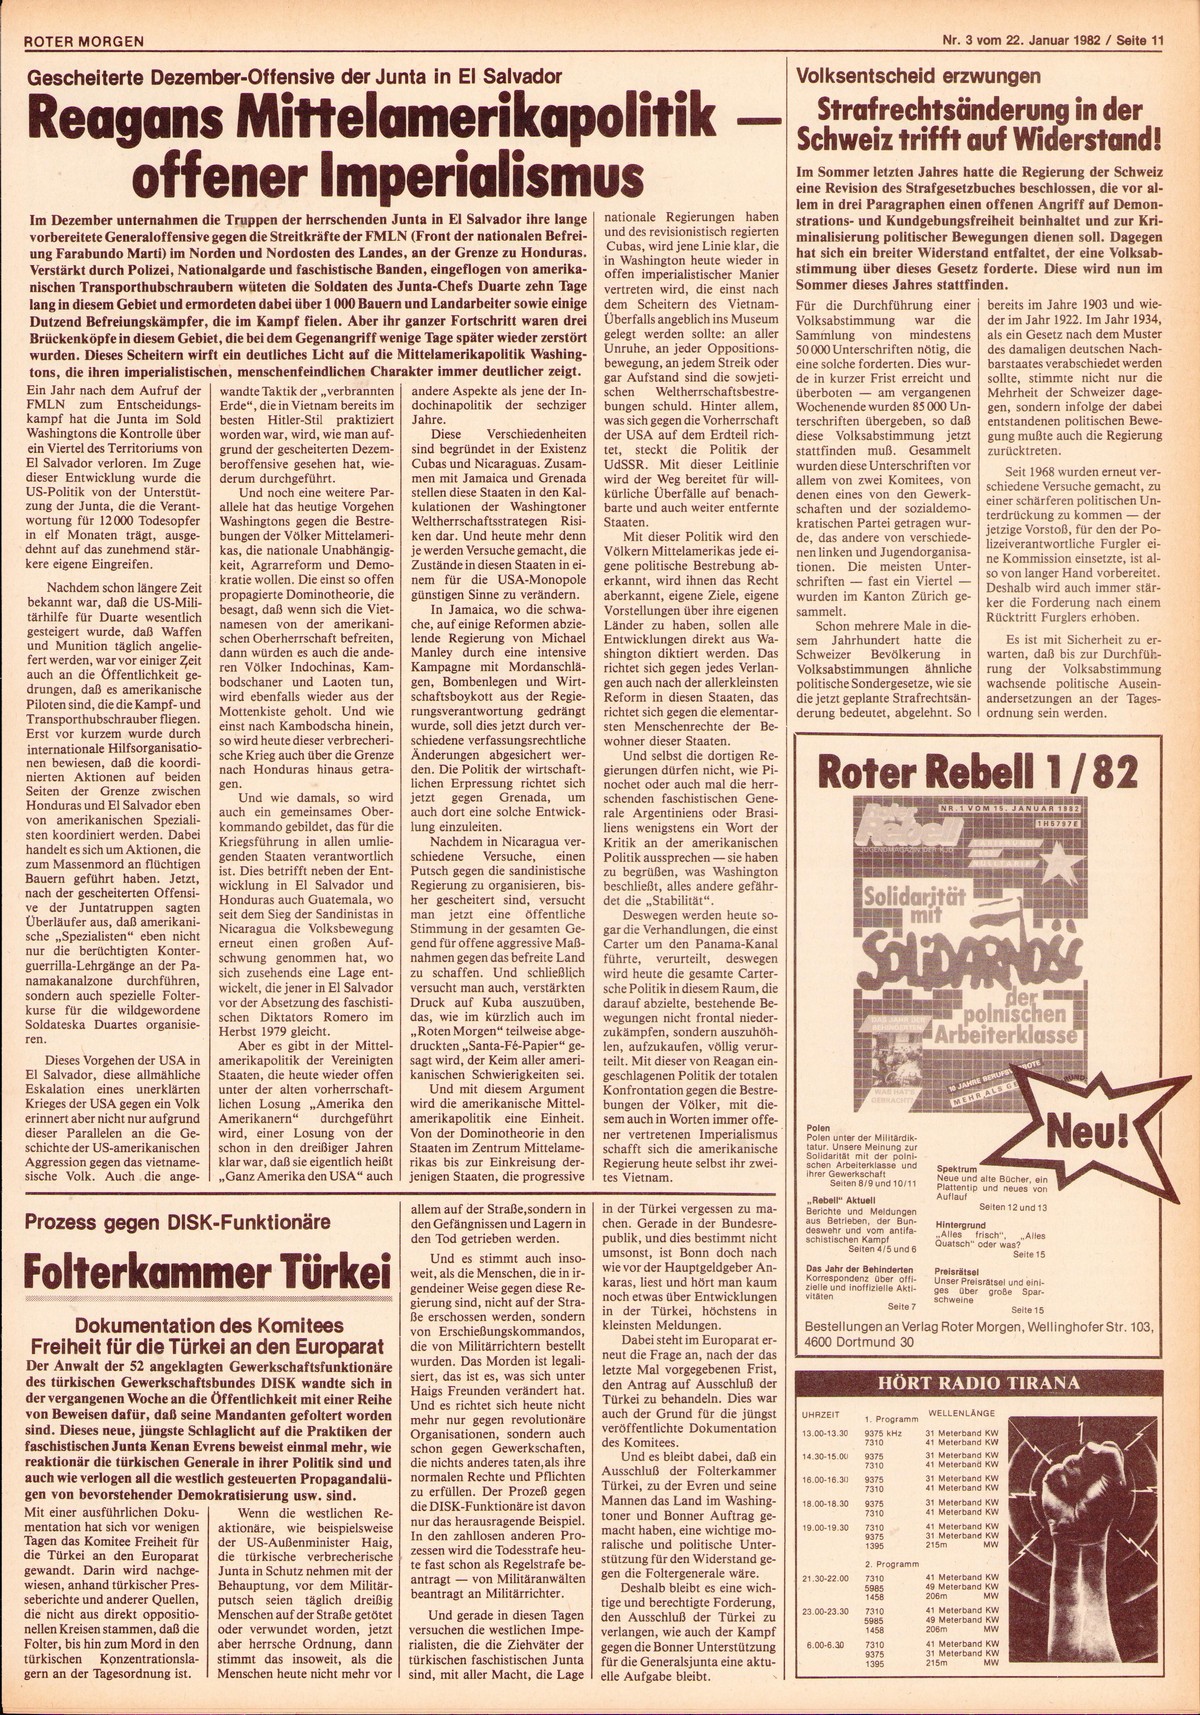 Roter Morgen, 16. Jg., 22. Januar 1982, Nr. 3, Seite 11